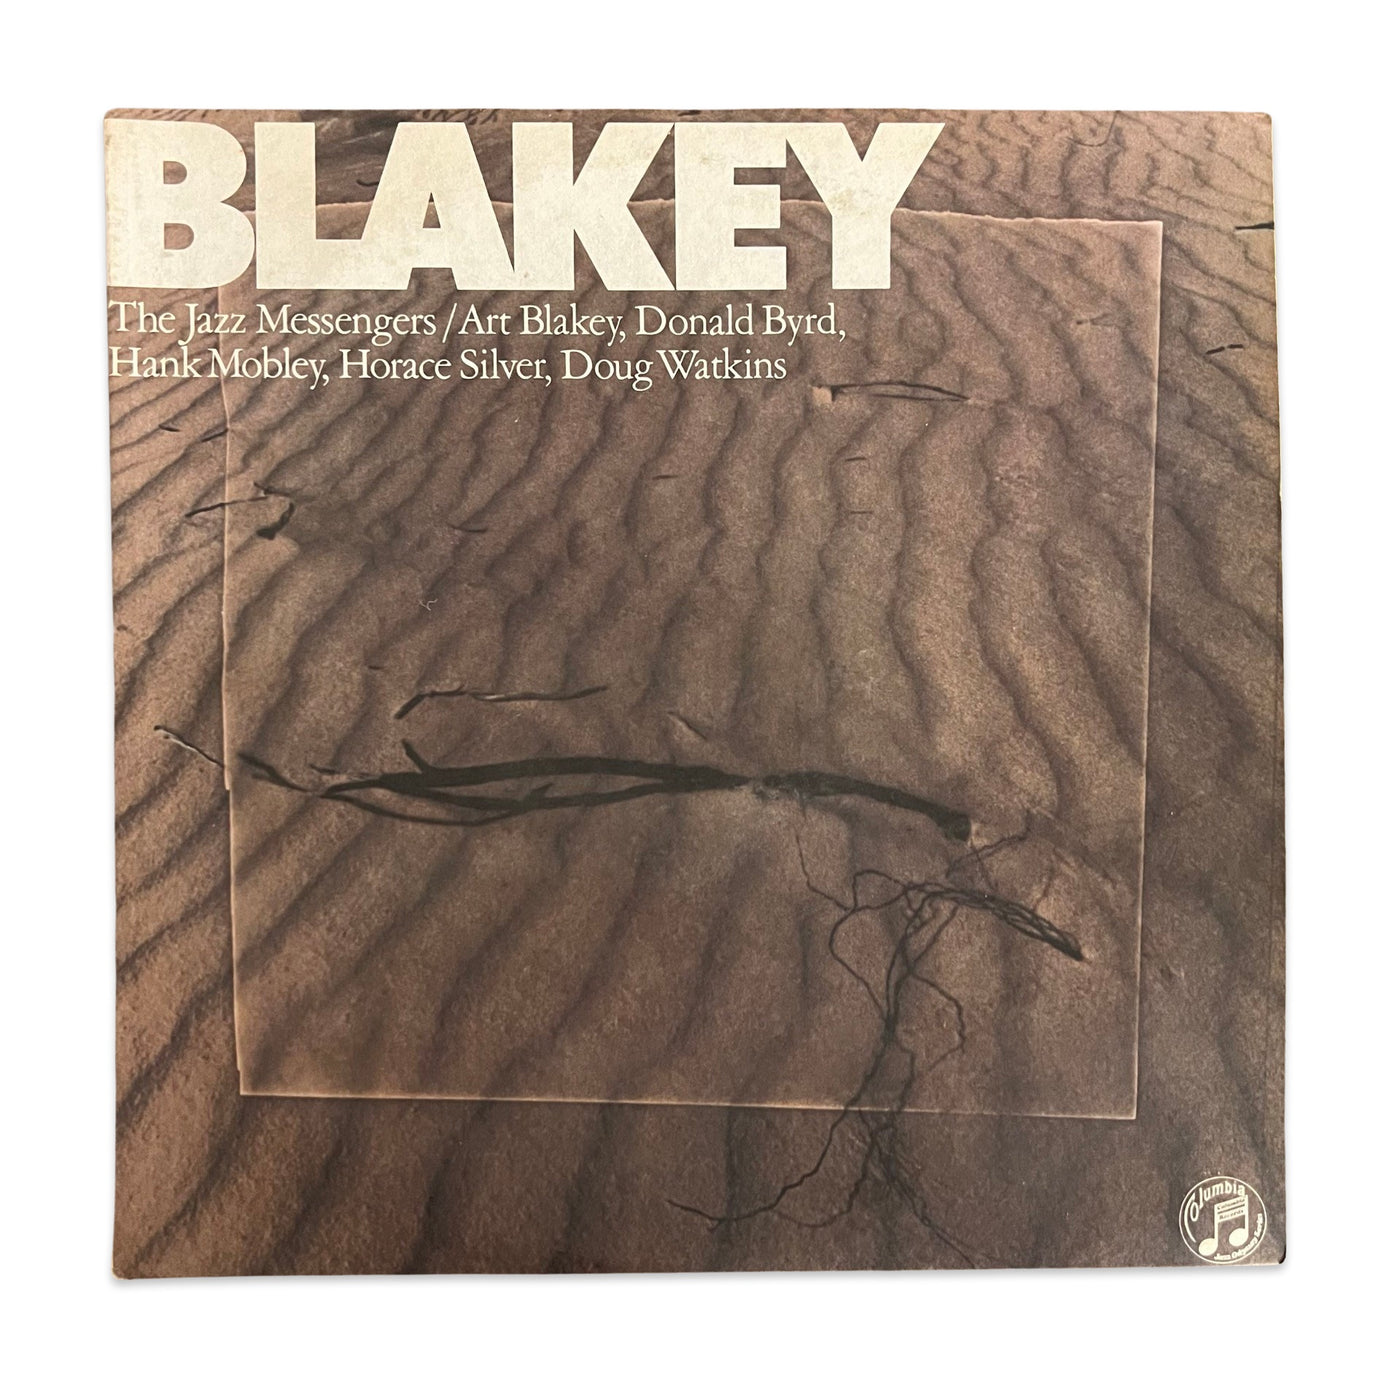 Art Blakey & The Jazz Messengers – The Jazz Messengers